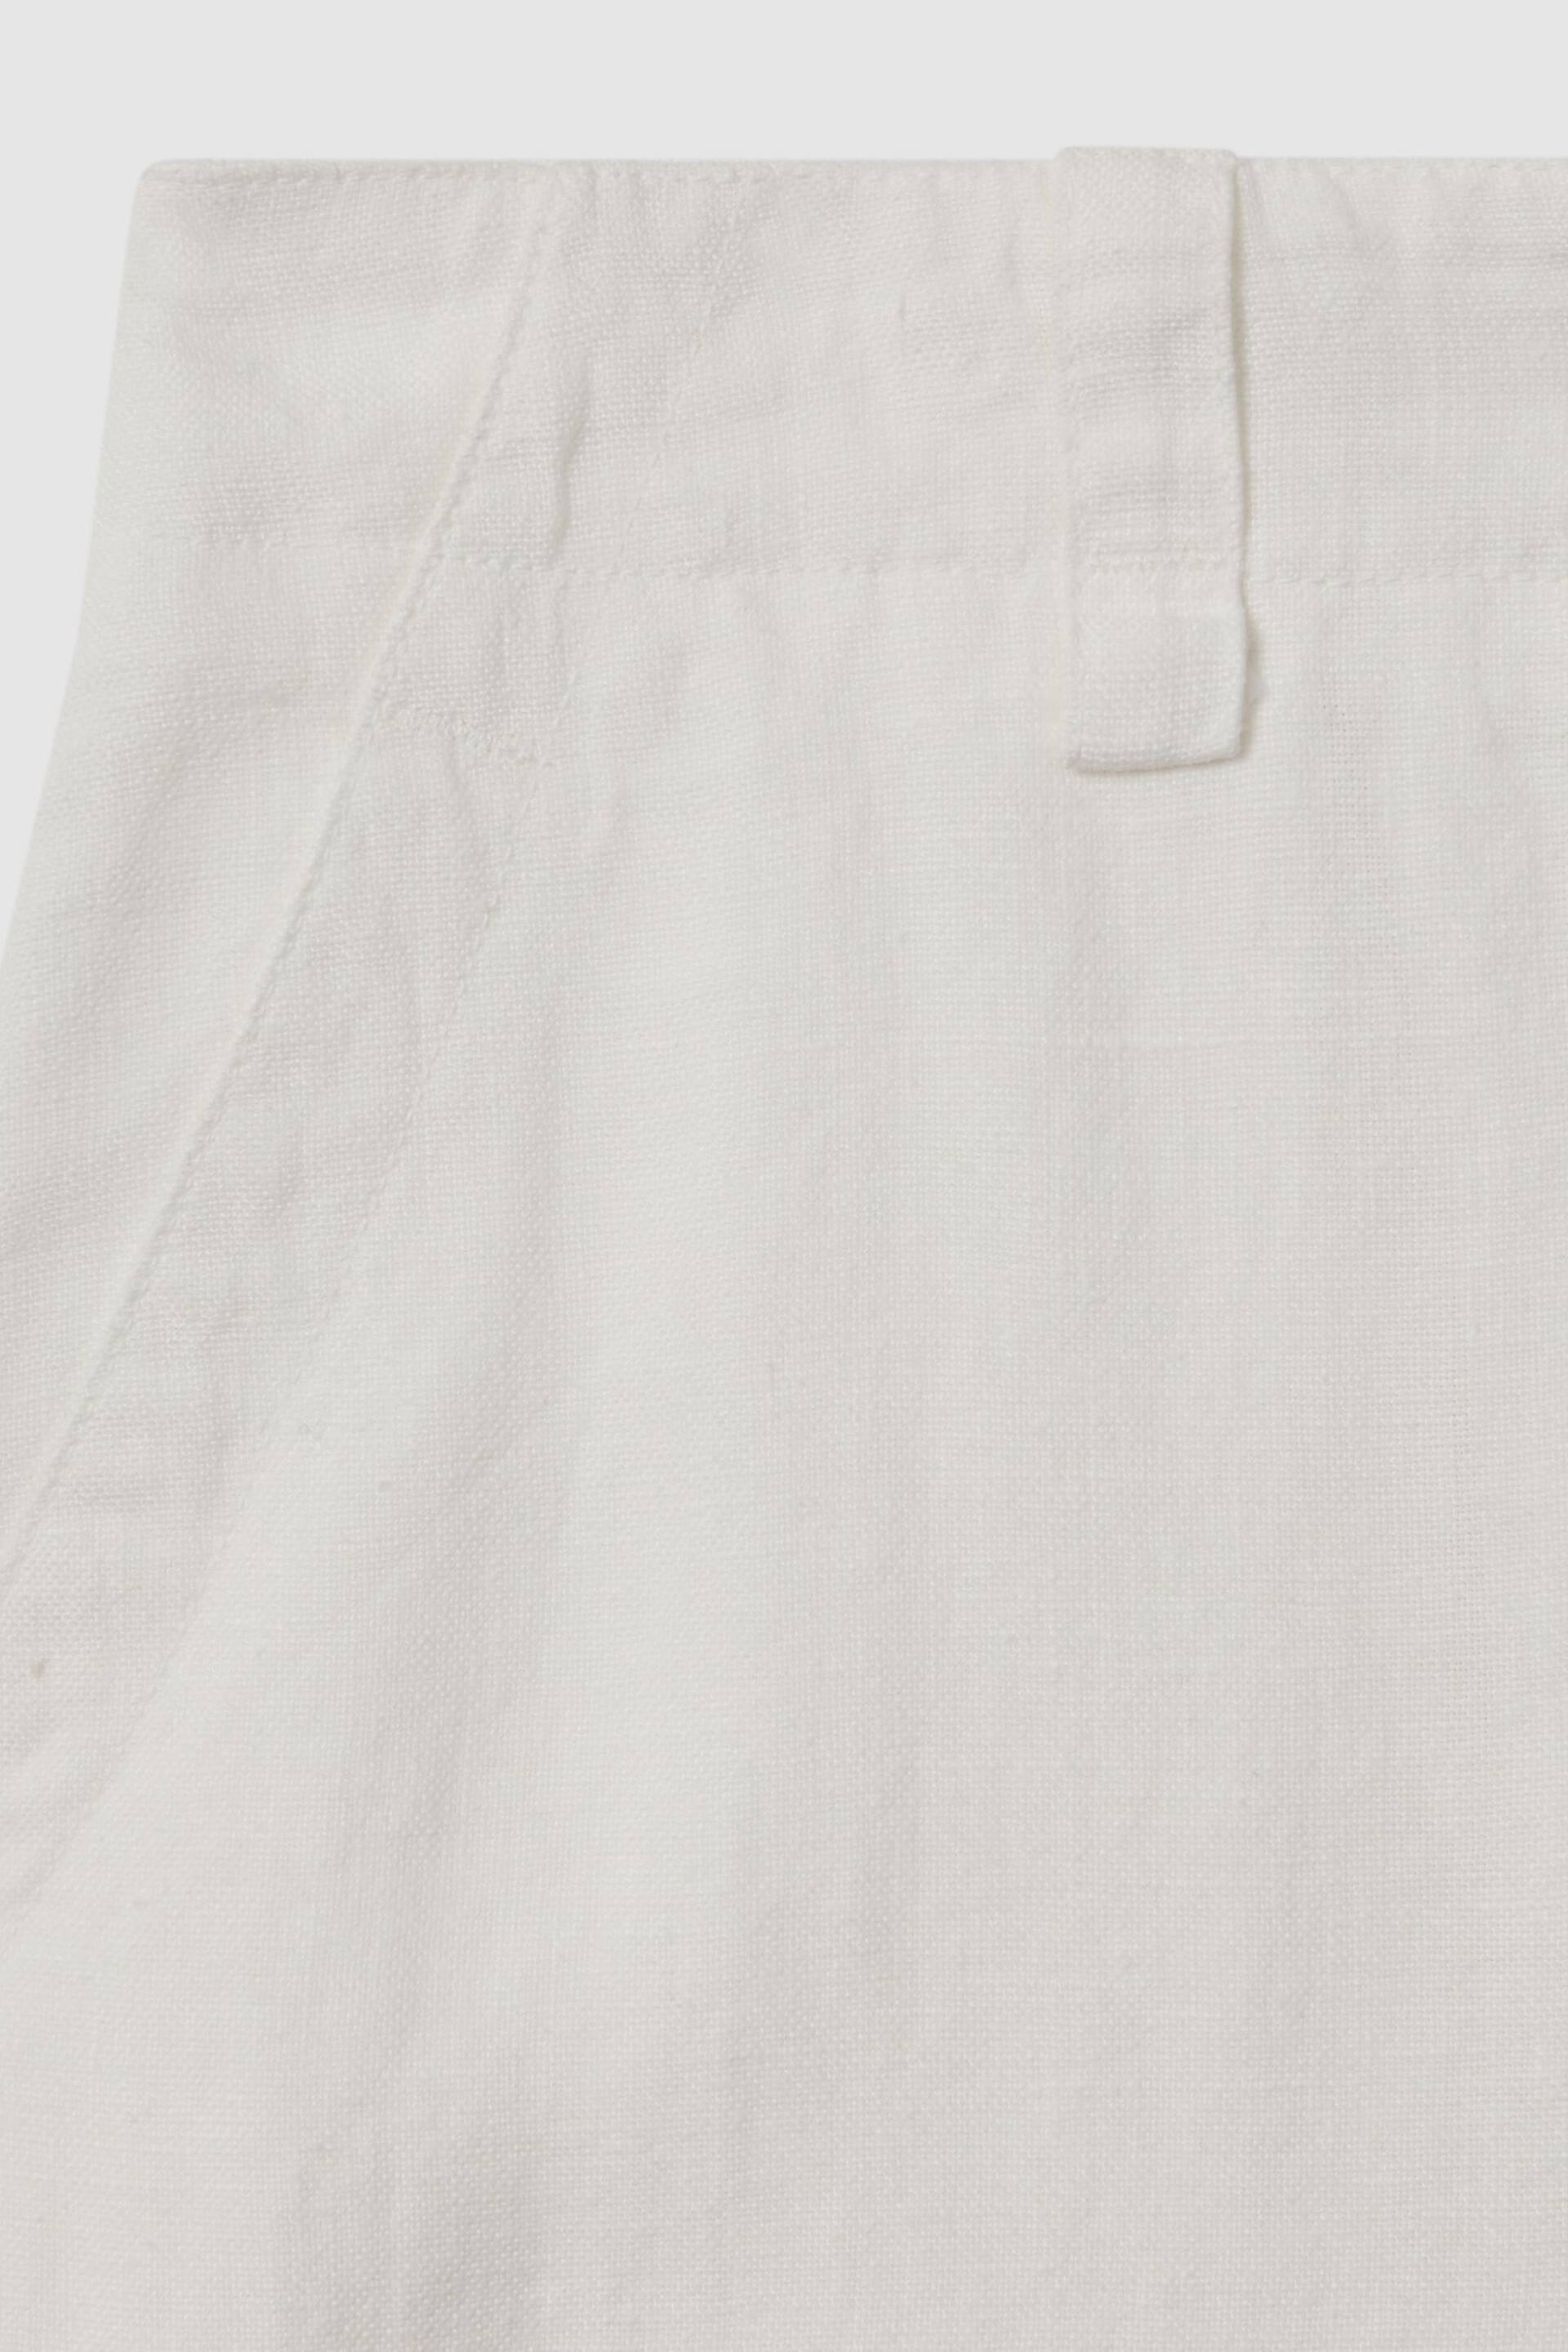 Reiss White Demi Linen Wide Leg Garment Dyed Trousers - Image 5 of 5